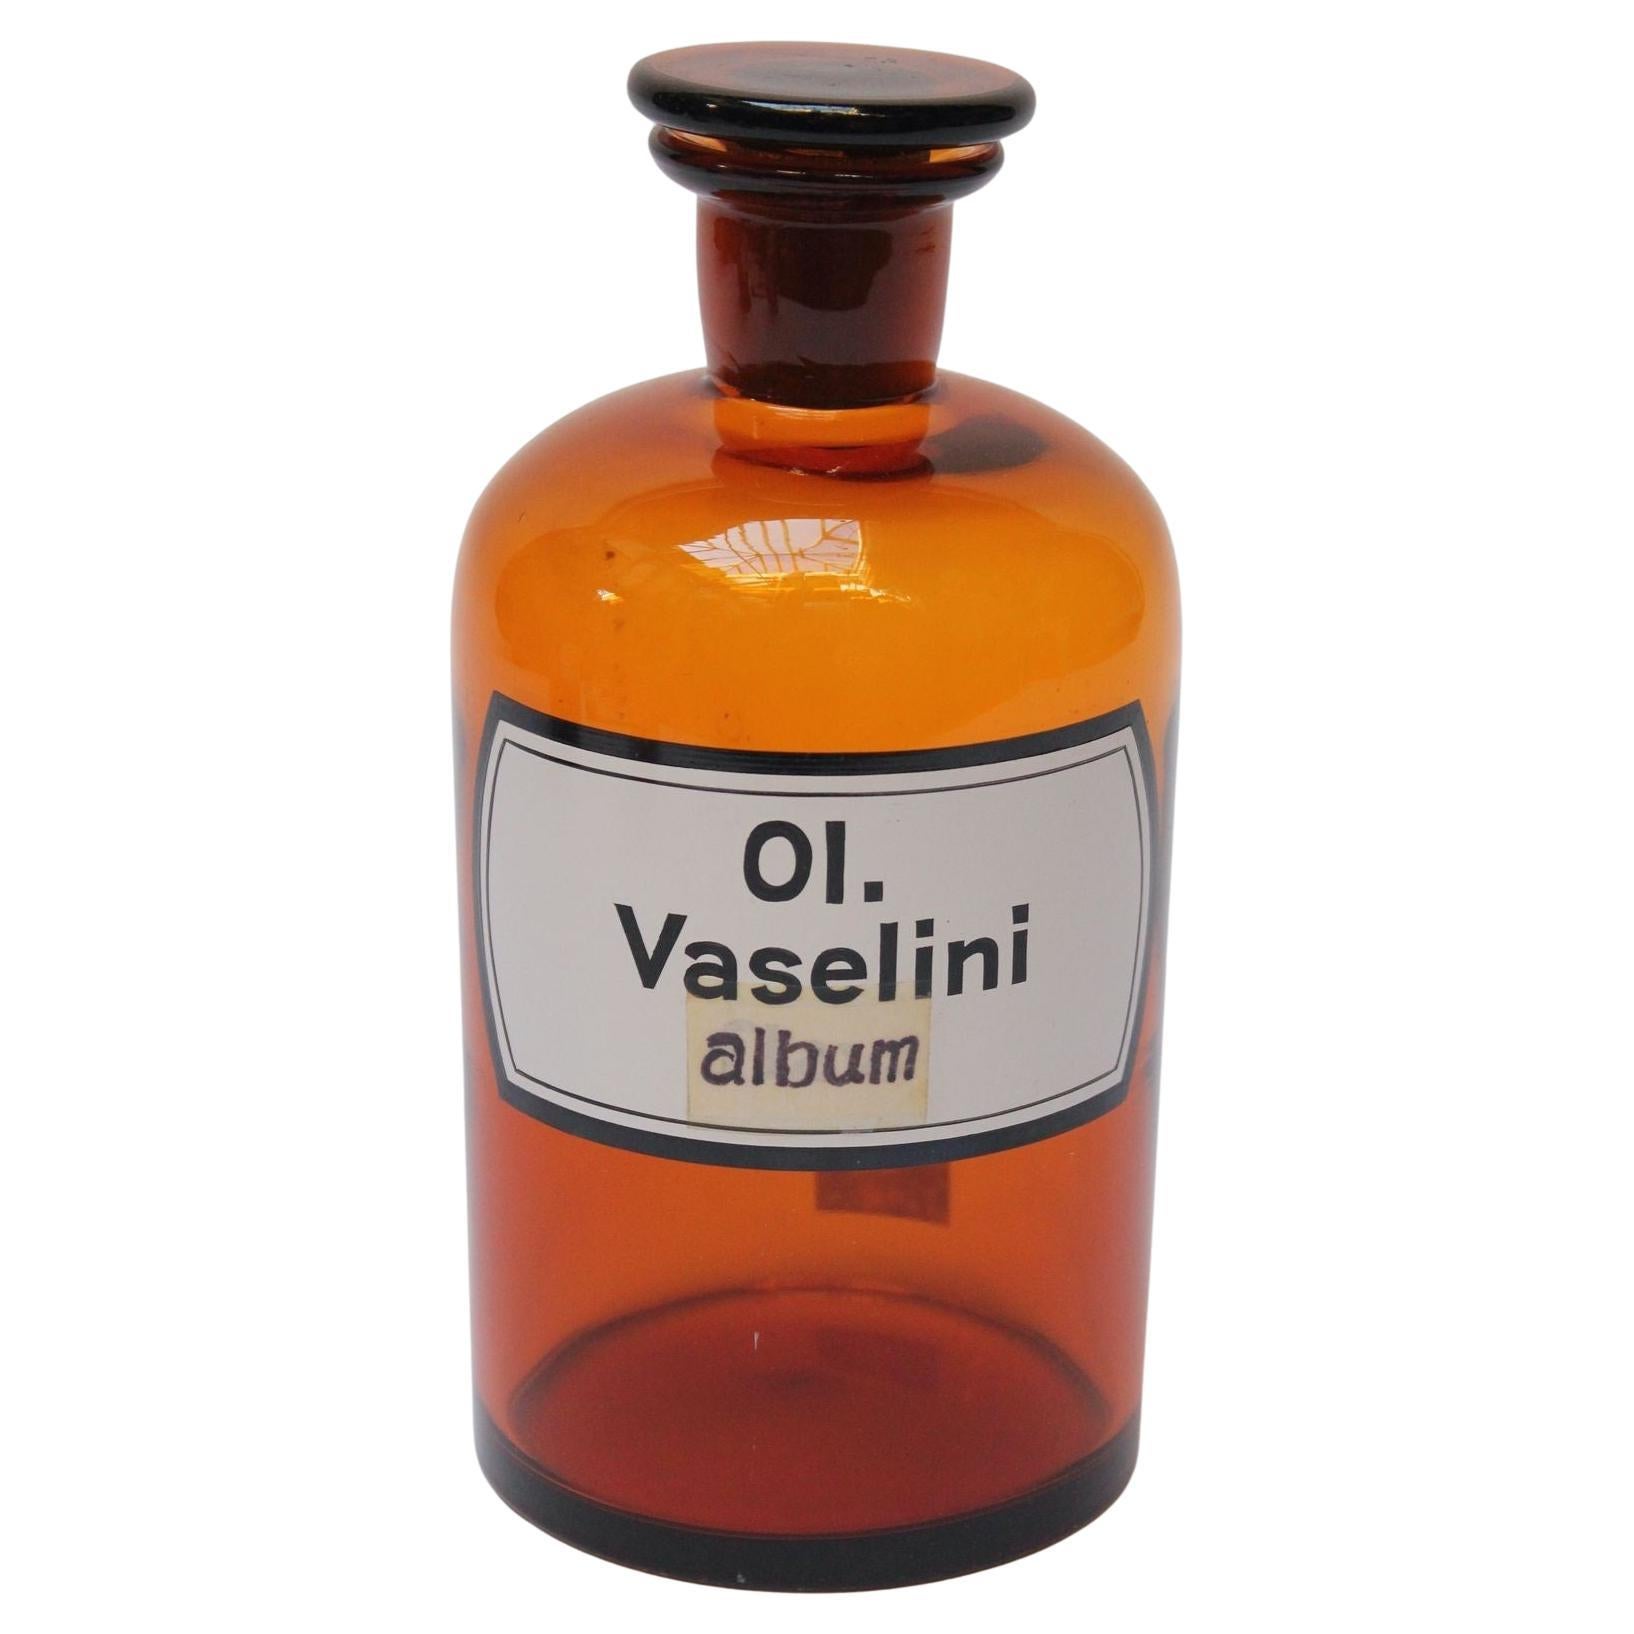 Vintage German Amber Glass "Ol. Vaselini" Apothecary Bottle For Sale